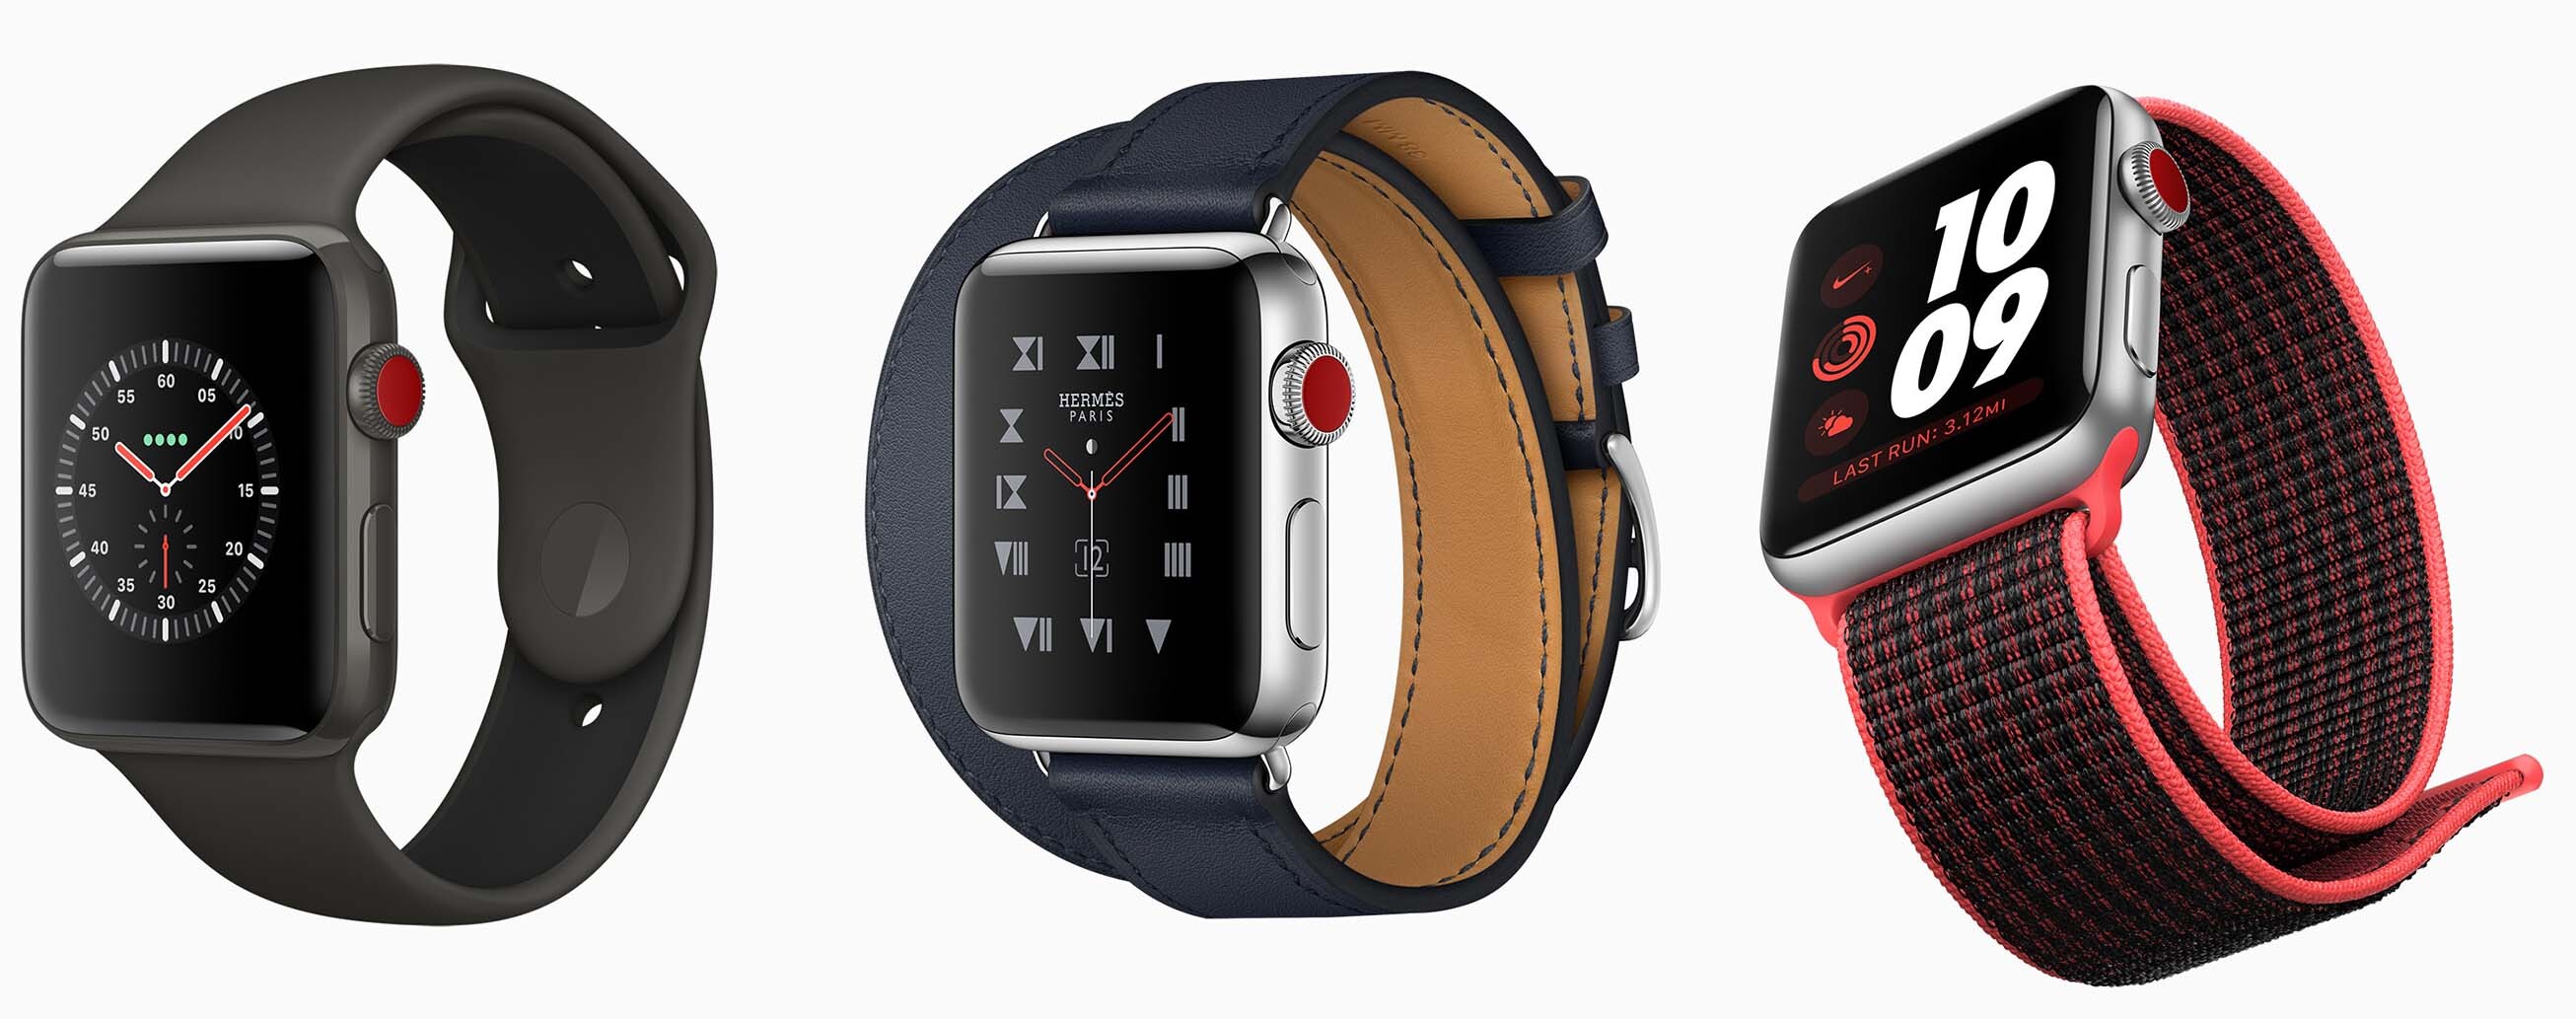 Apple Watch Series 3 price, videos, deals and specs | NextPit